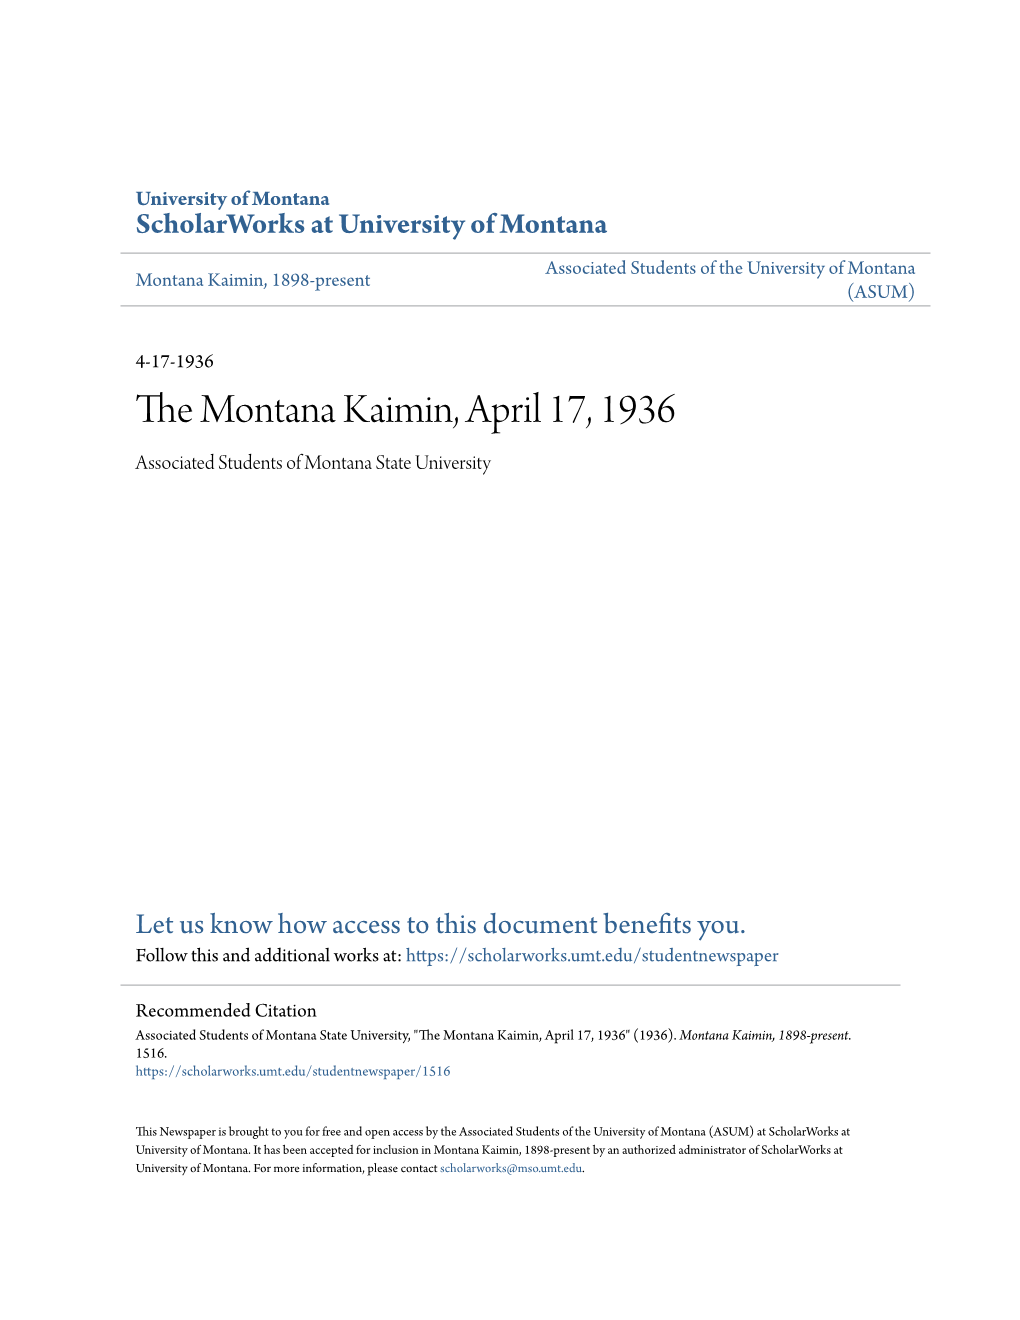 The Montana Kaimin, April 17, 1936